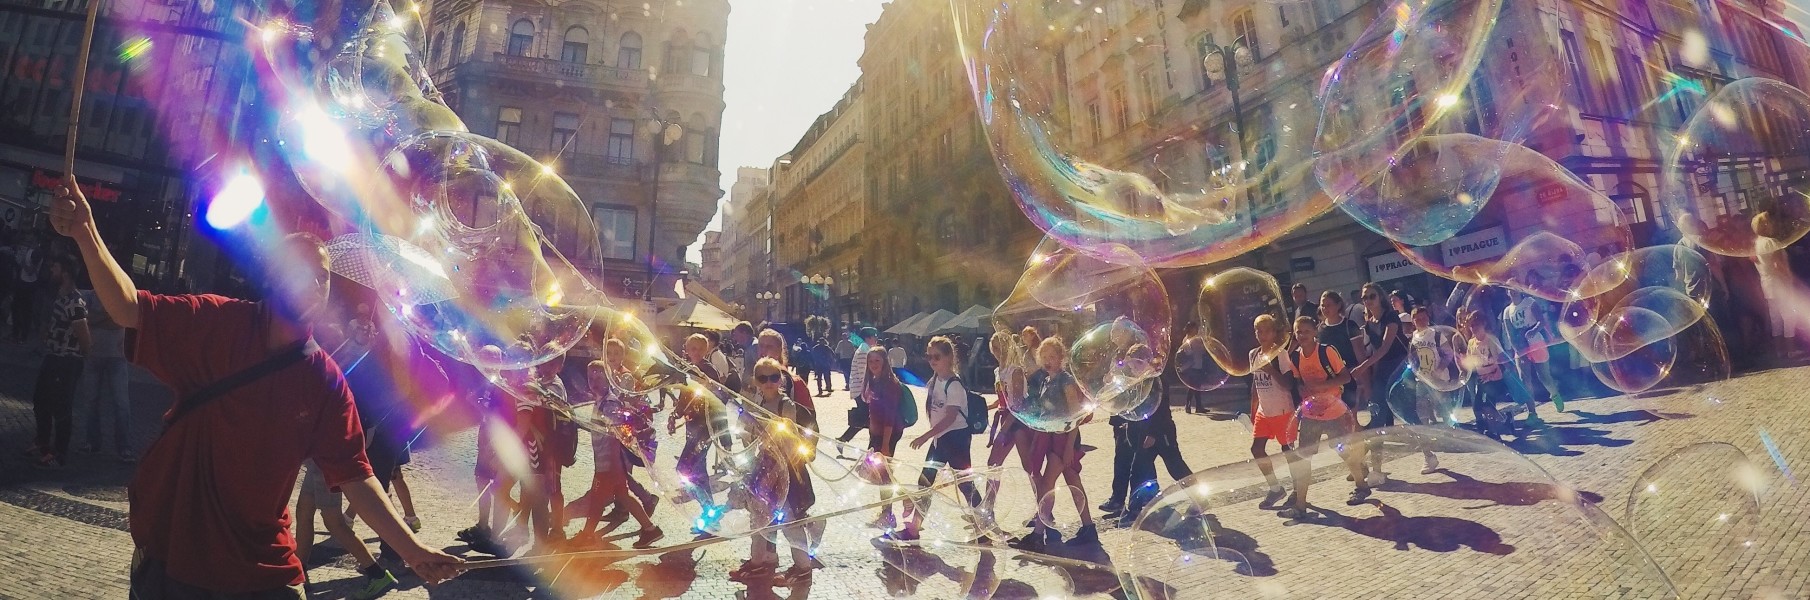 Image of Bubbles across street